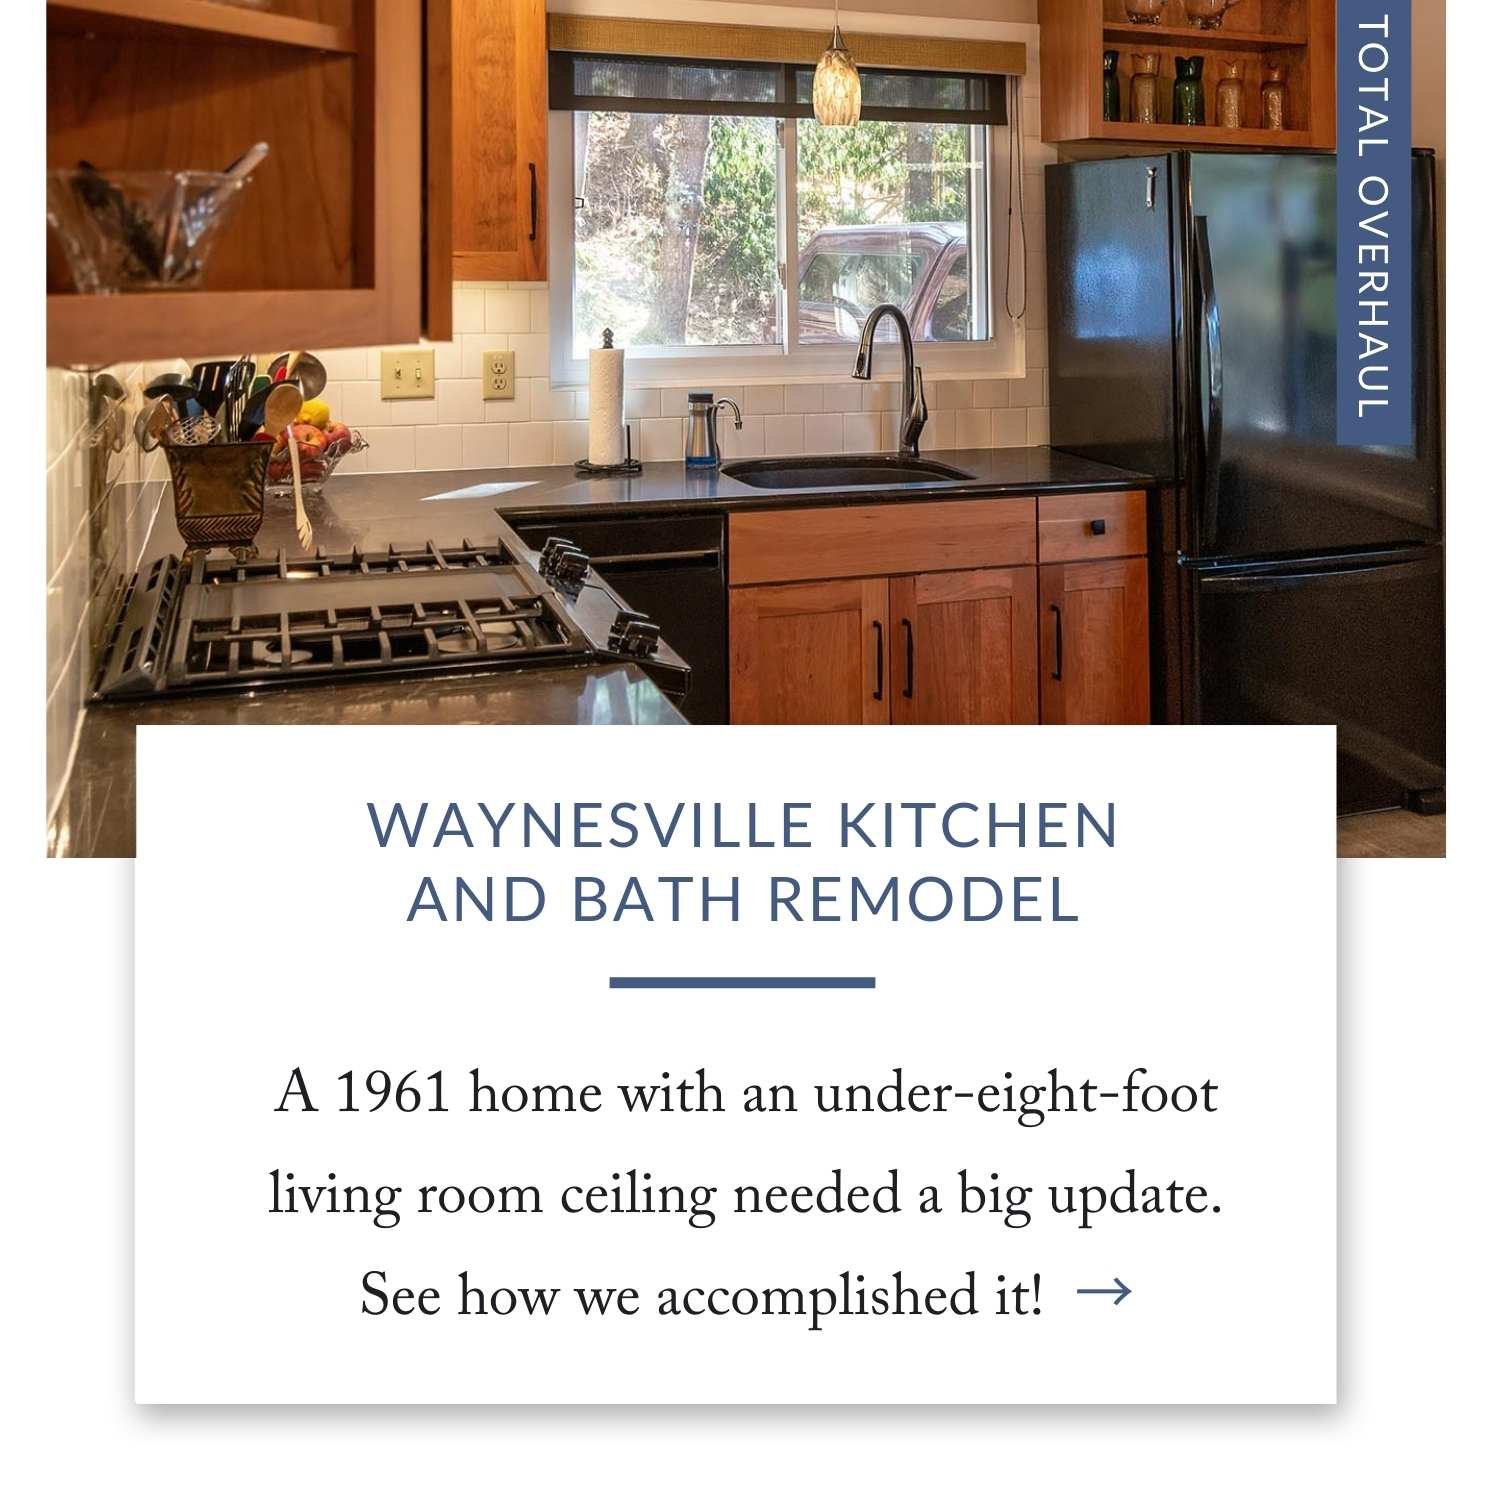 Waynesville Kitchen and Bath Remodel DAV 2018.jpg